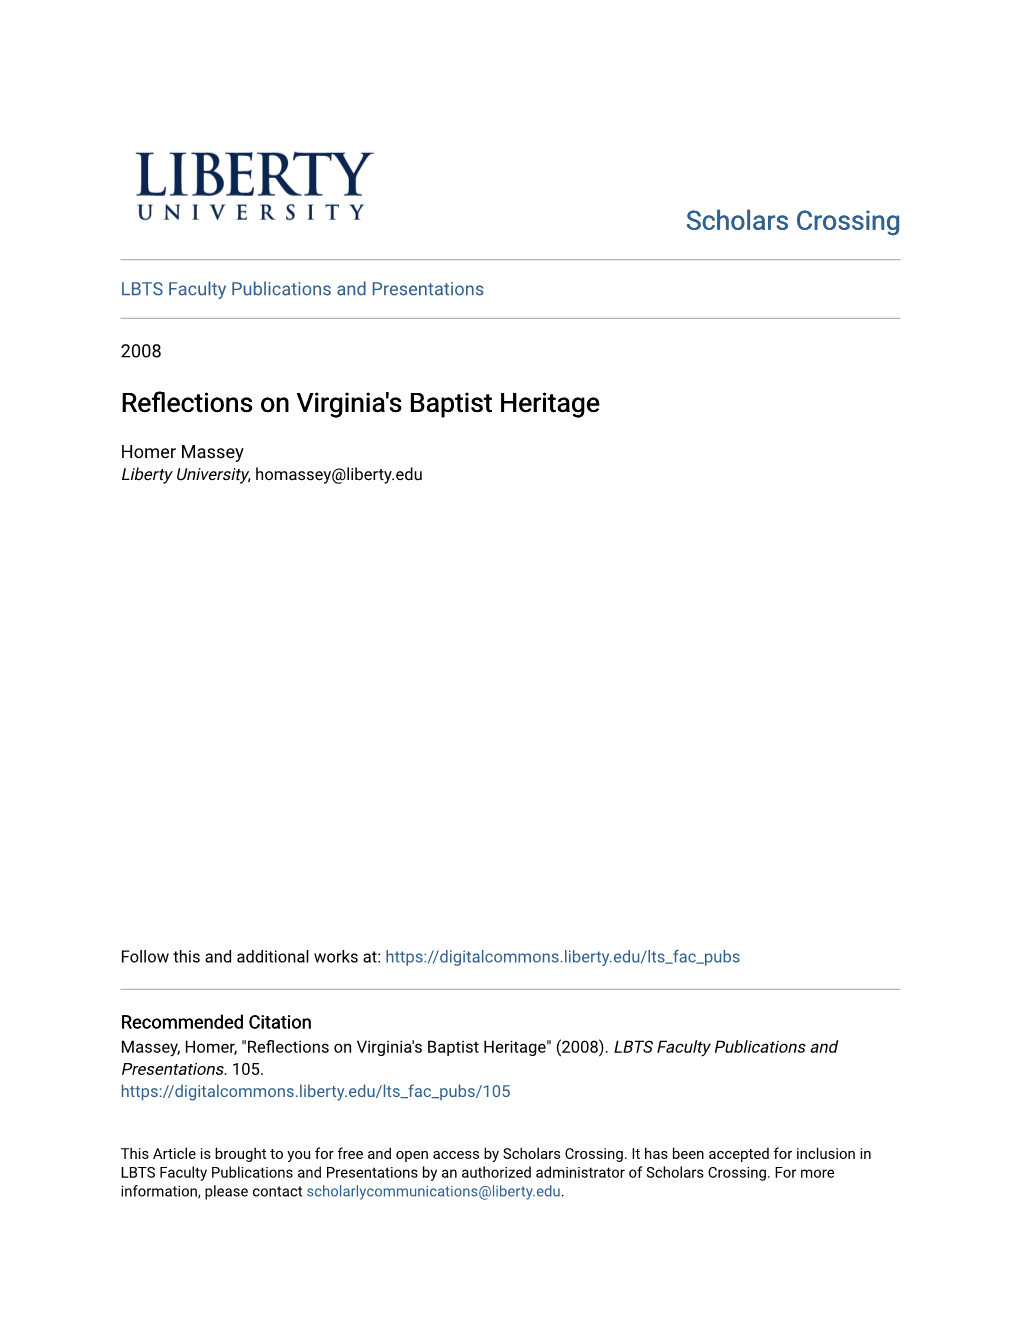 Reflections on Virginia's Baptist Heritage